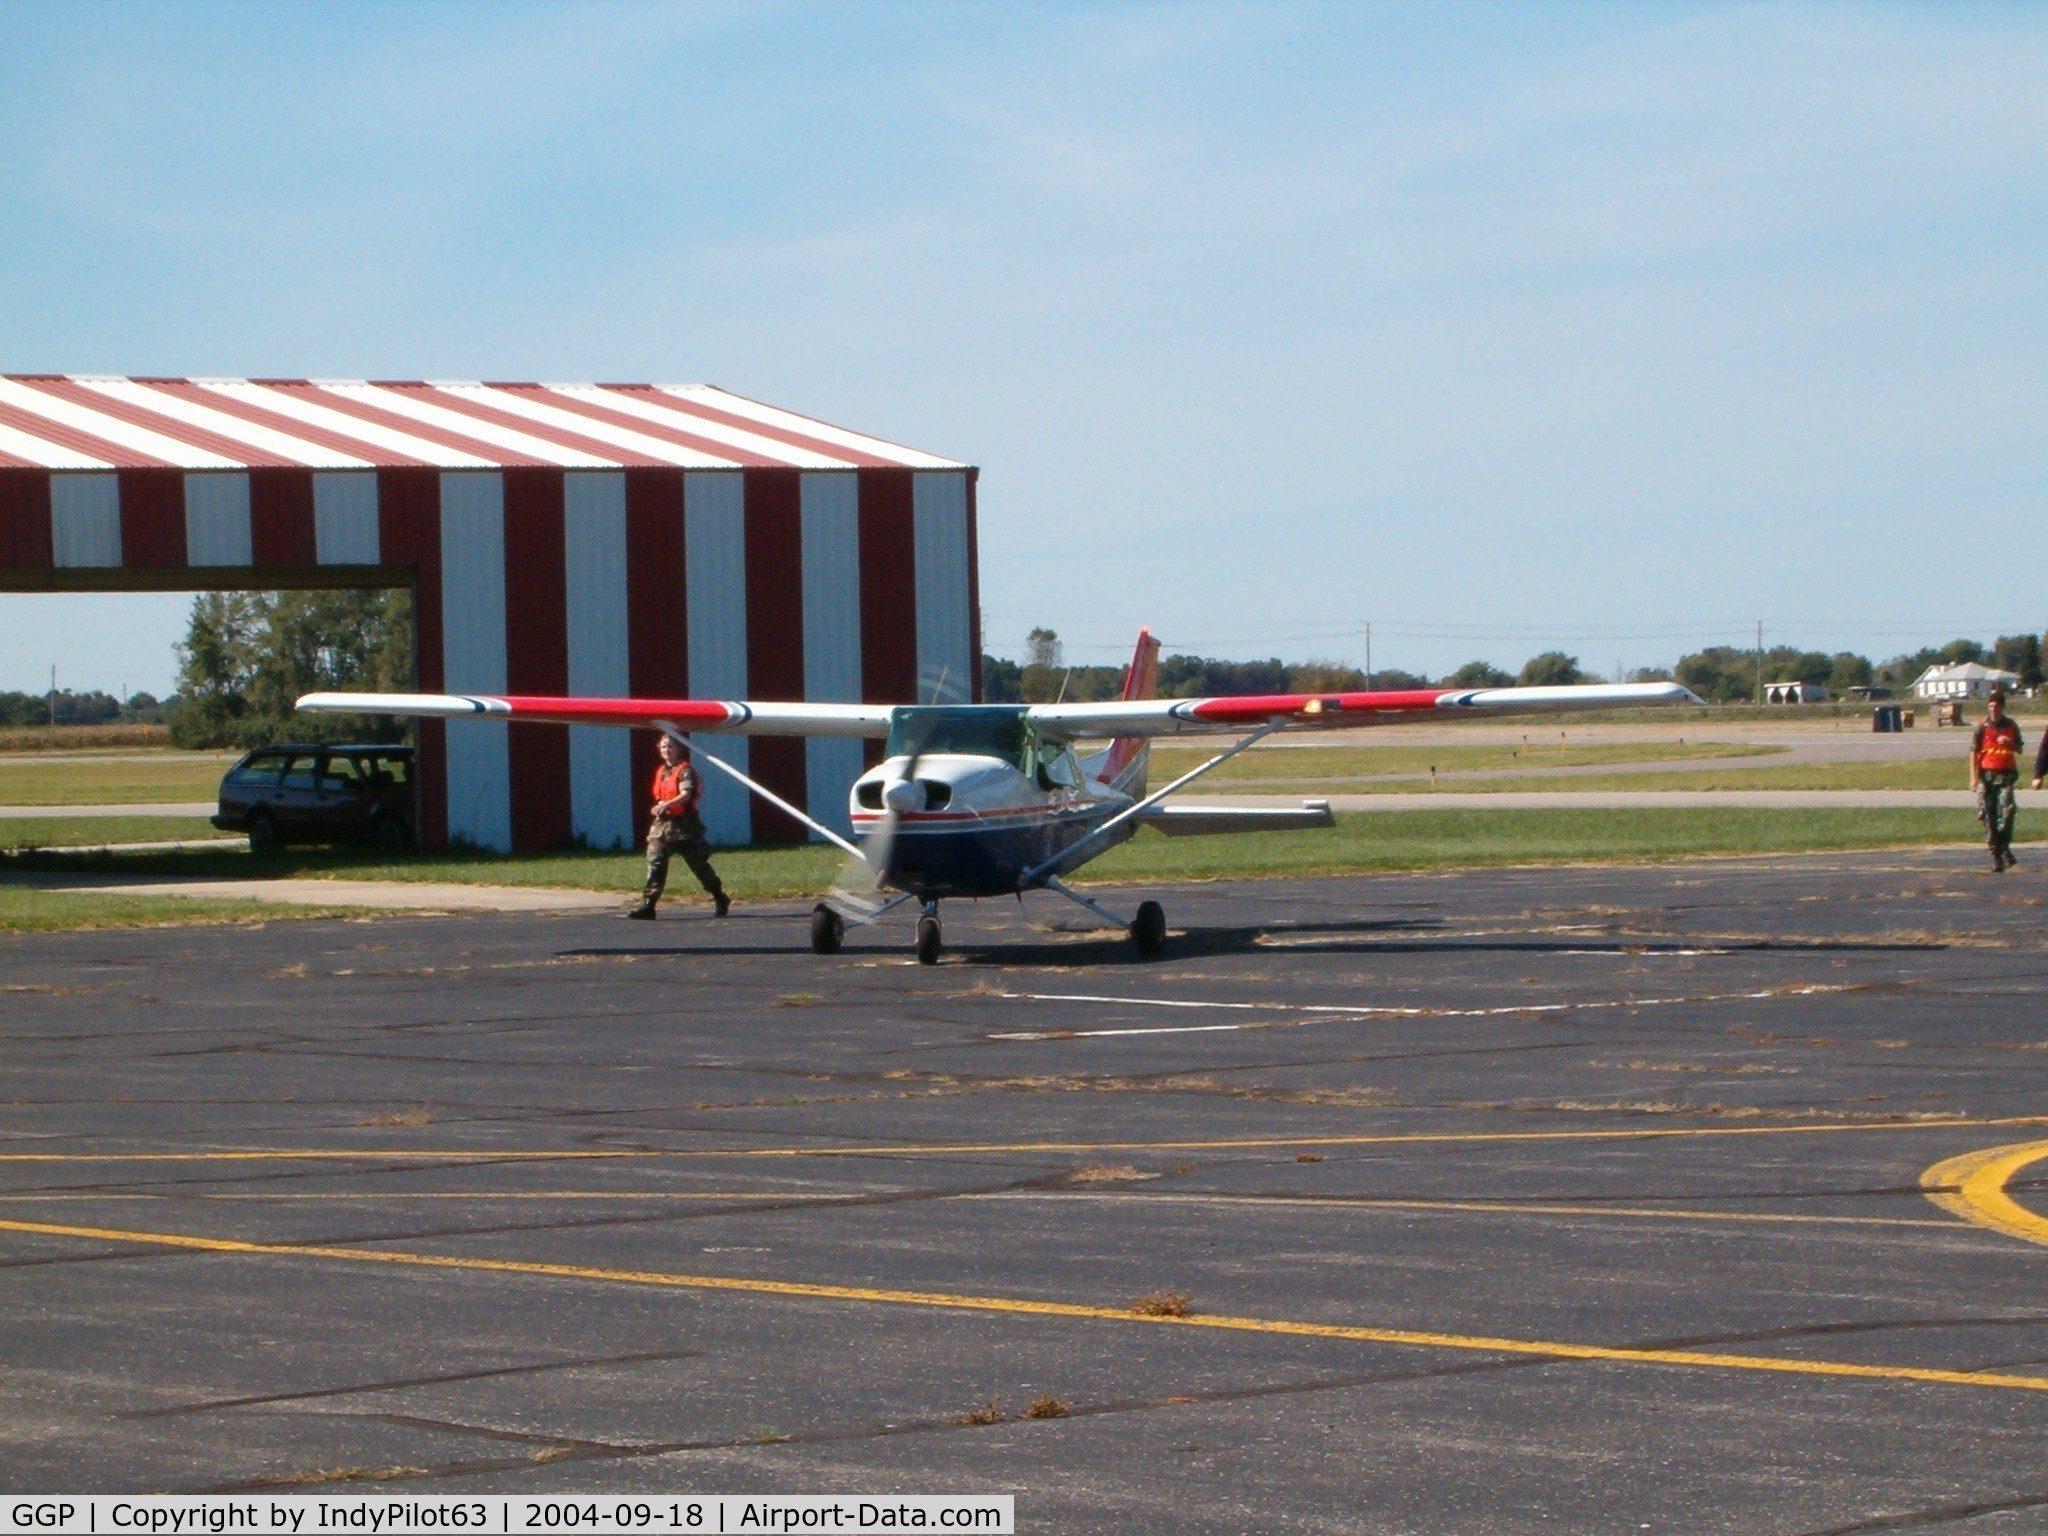 Logansport/cass County Airport (GGP) - Civil Air Patrol Skyhawk at Logansport